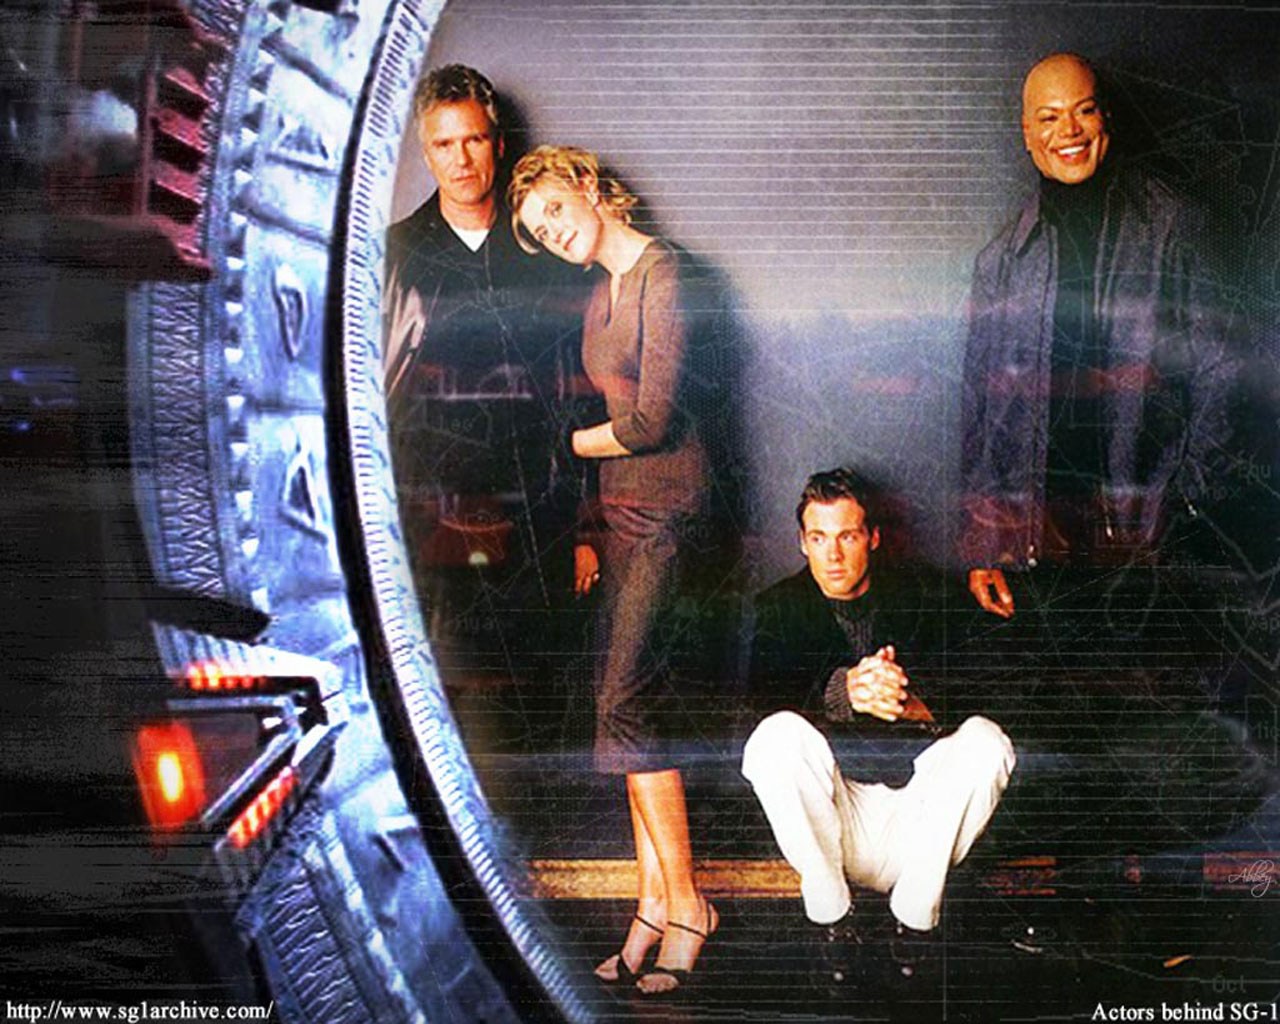 Stargate Sg1 , HD Wallpaper & Backgrounds